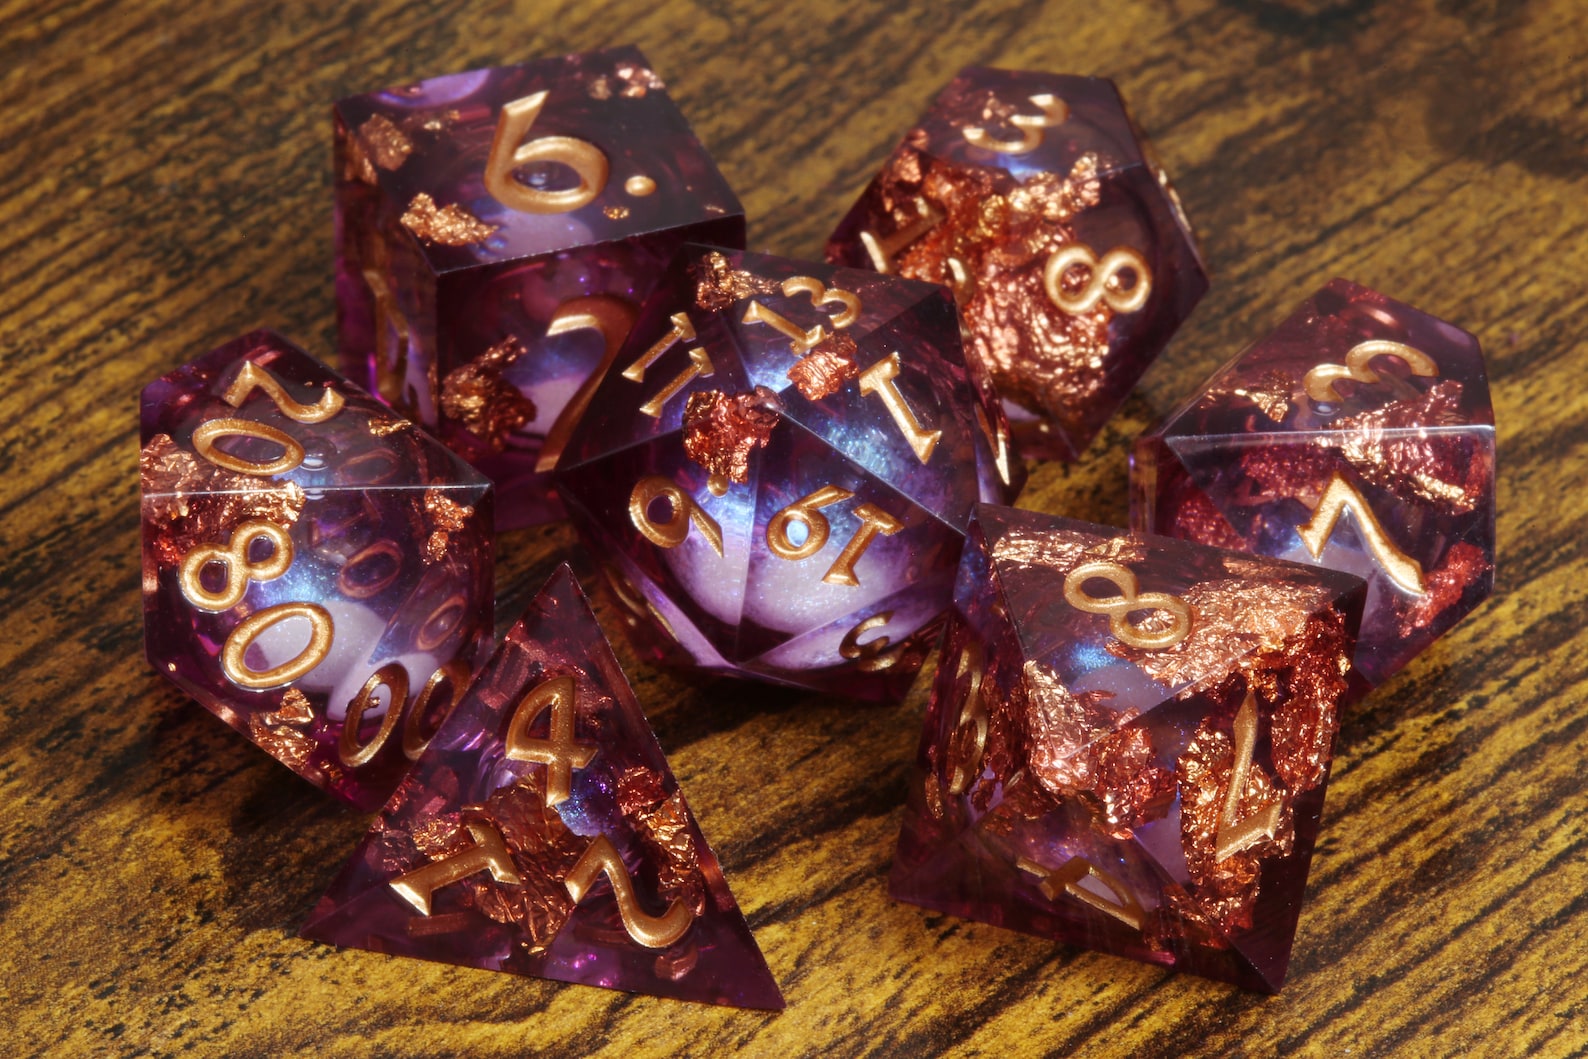 Aether Flux dice set - Liquid Core sharp edge dice - The Wizard's Vault